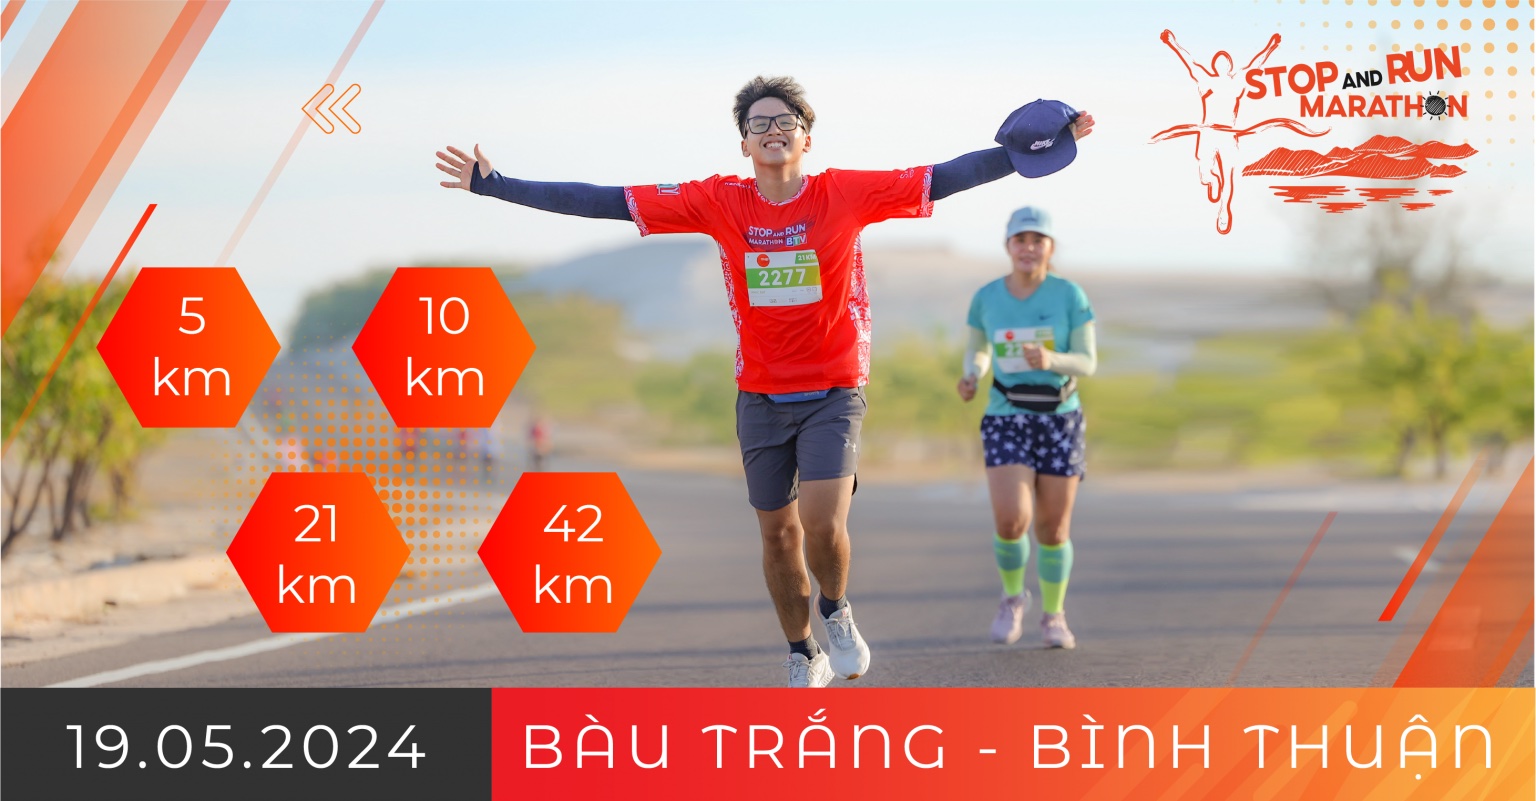 Stop and Run Marathon Bình Thuận 2024